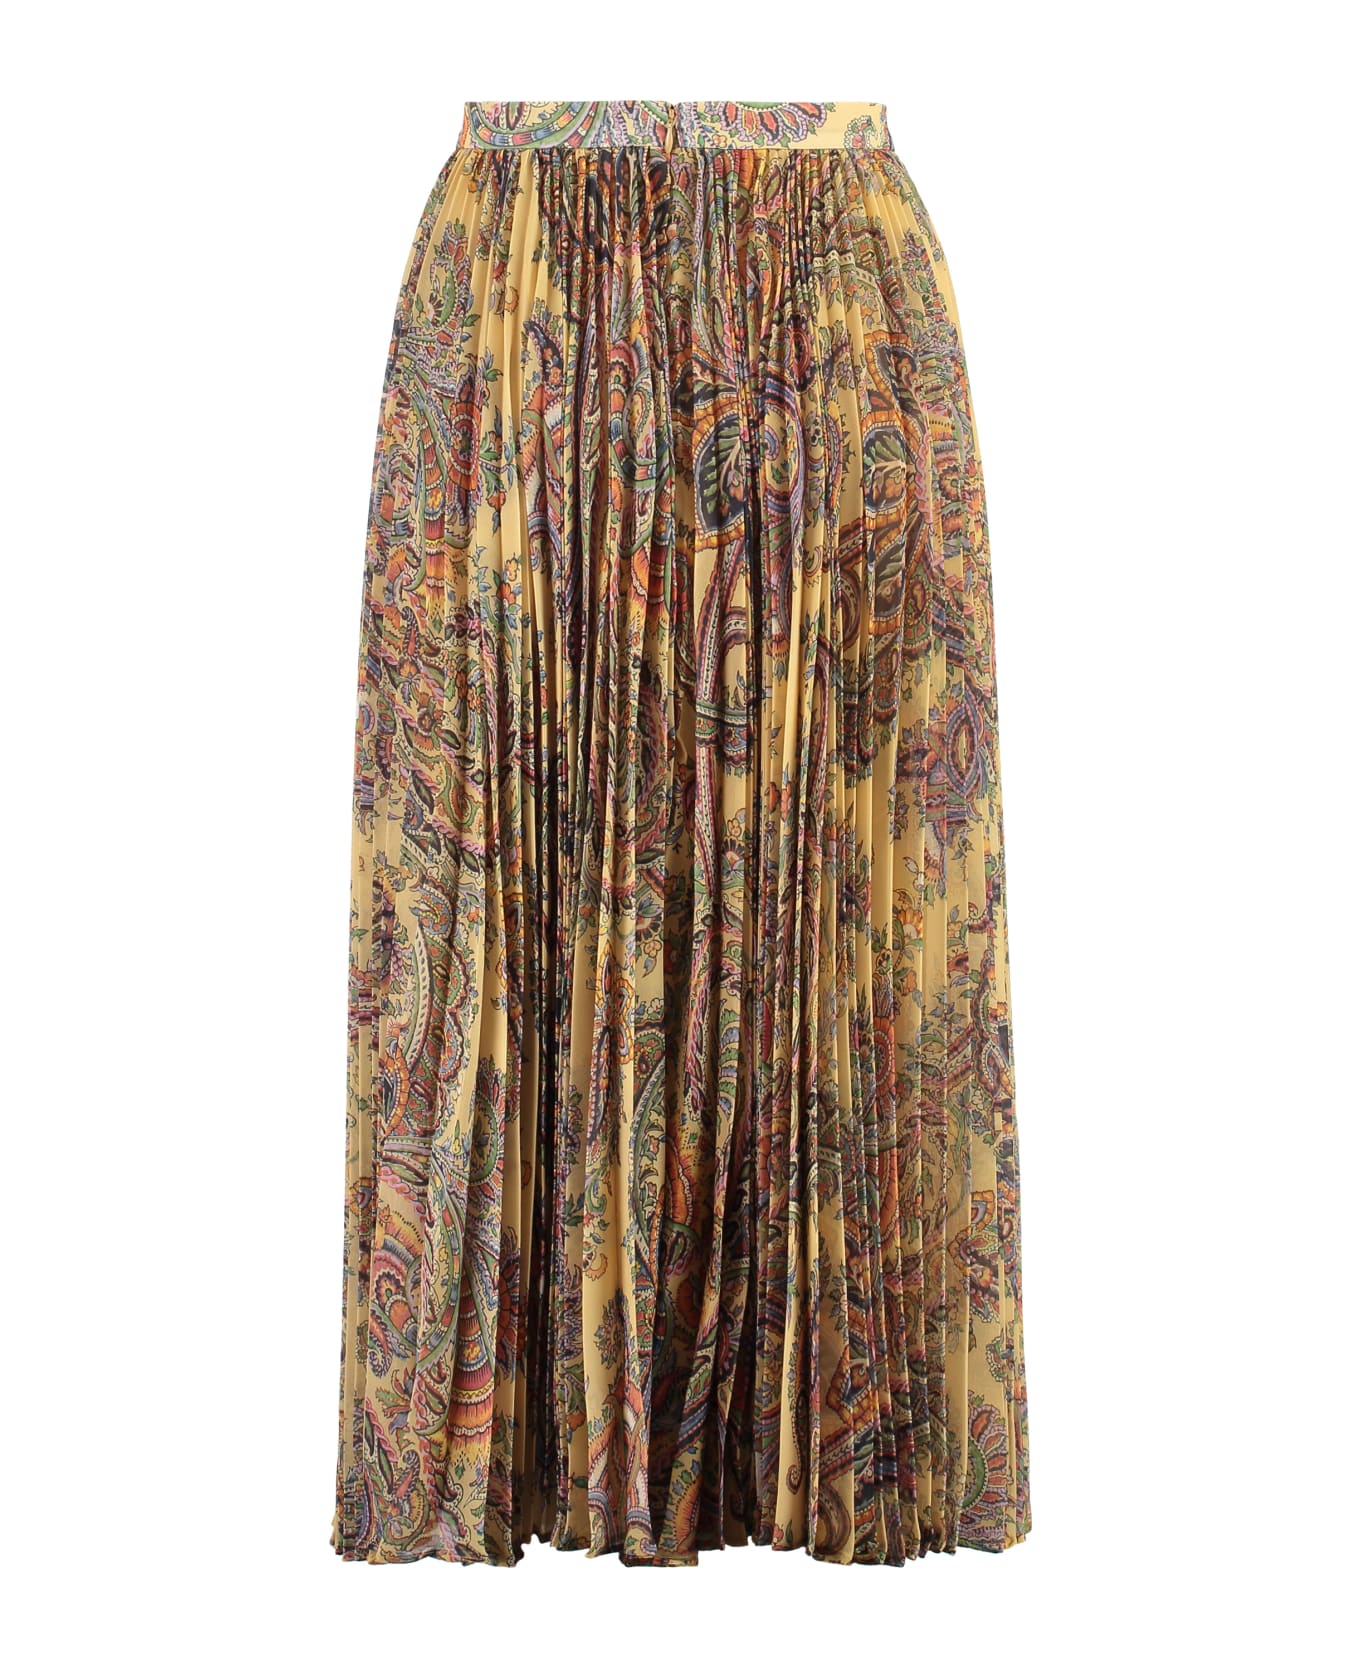 Etro Printed Pleated Skirt - Beige